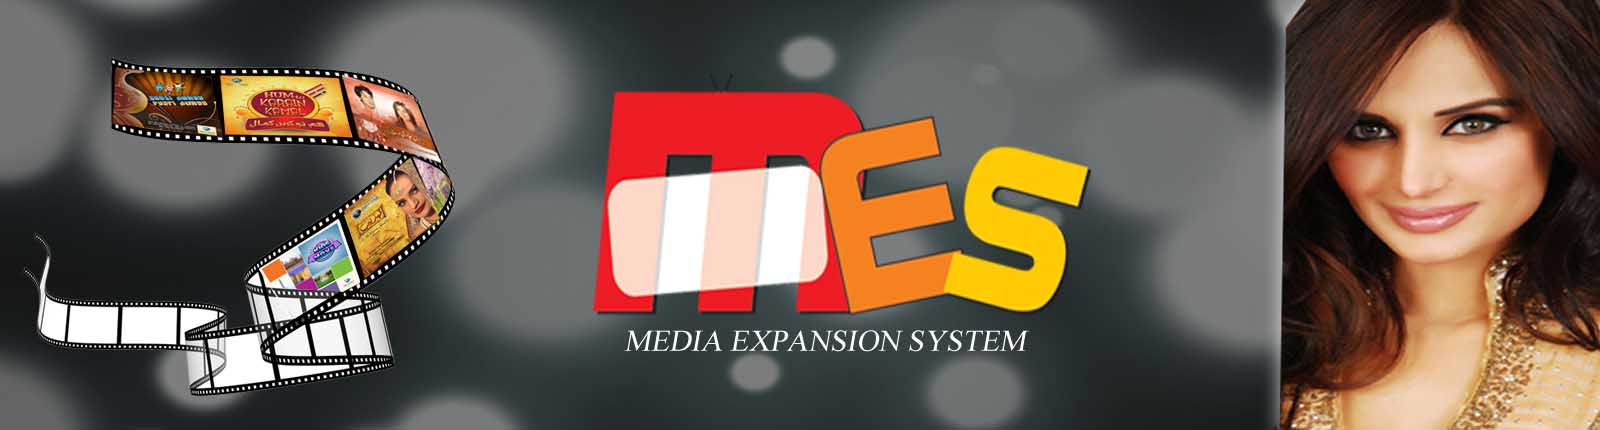 MEDIA EXPANSION SYSTEM 